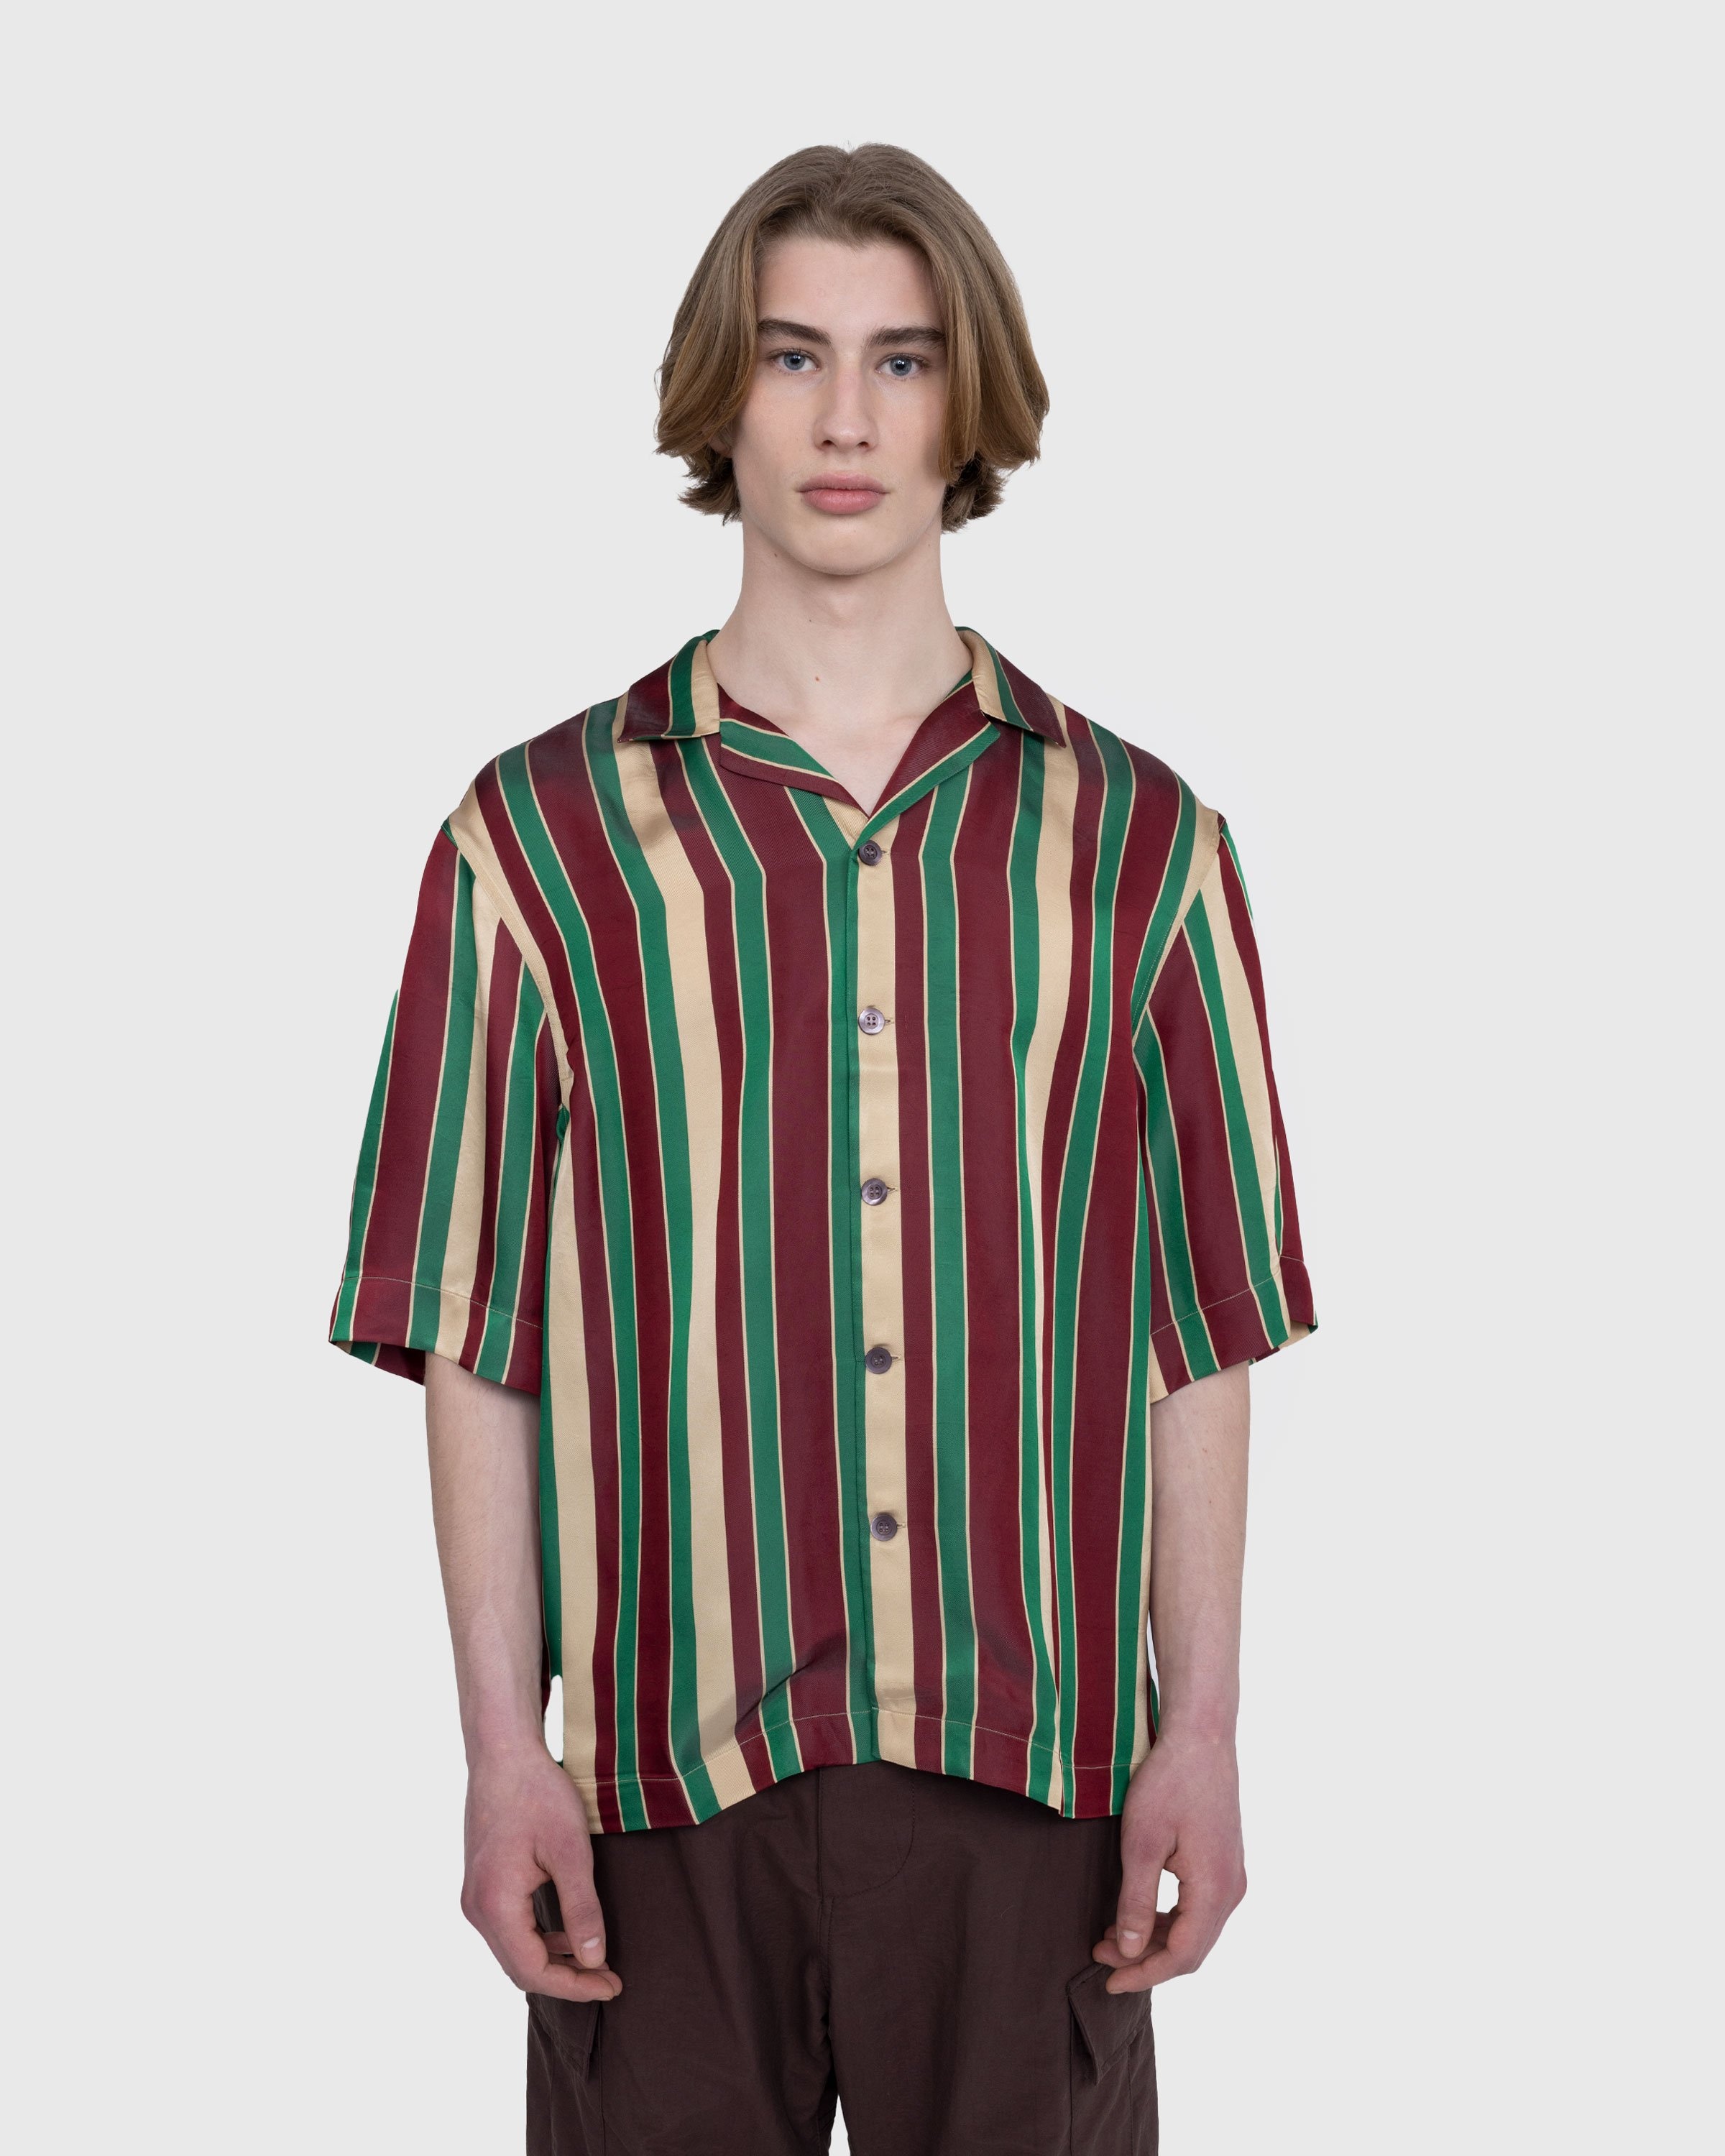 Dries van Noten – Cassi Shirt Bordeaux - Shortsleeve Shirts - Multi - Image 2